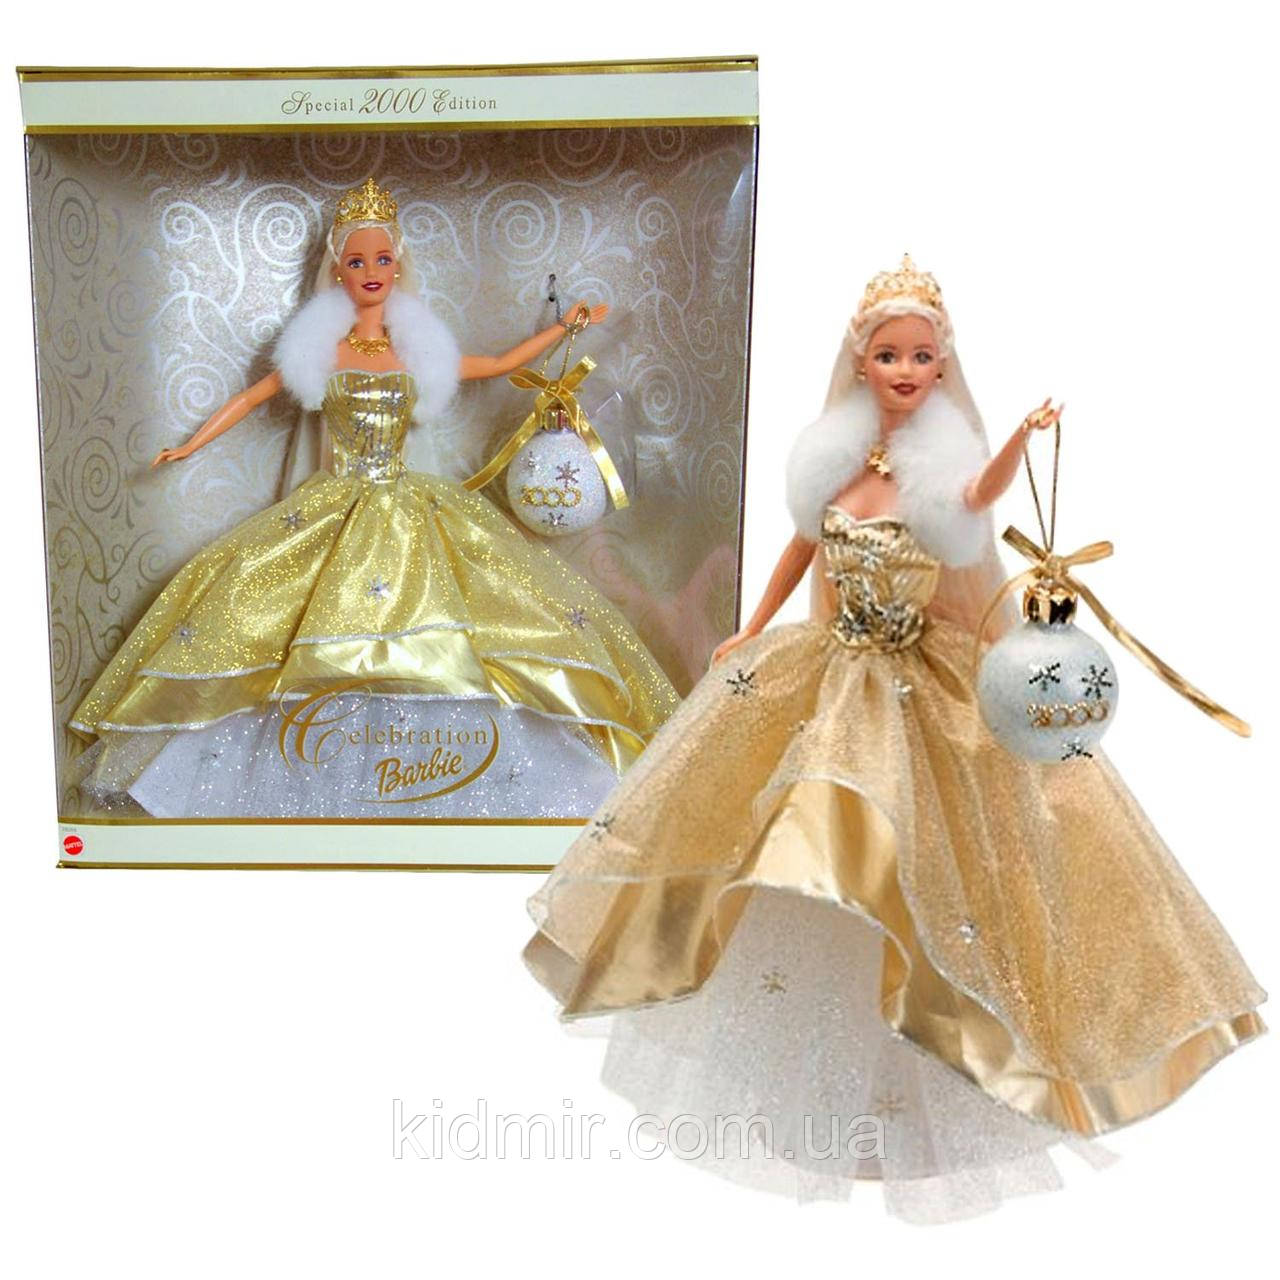 Barbie Celebration Holiday 28269 Лялька Барбі Колекційна Святкова 2000